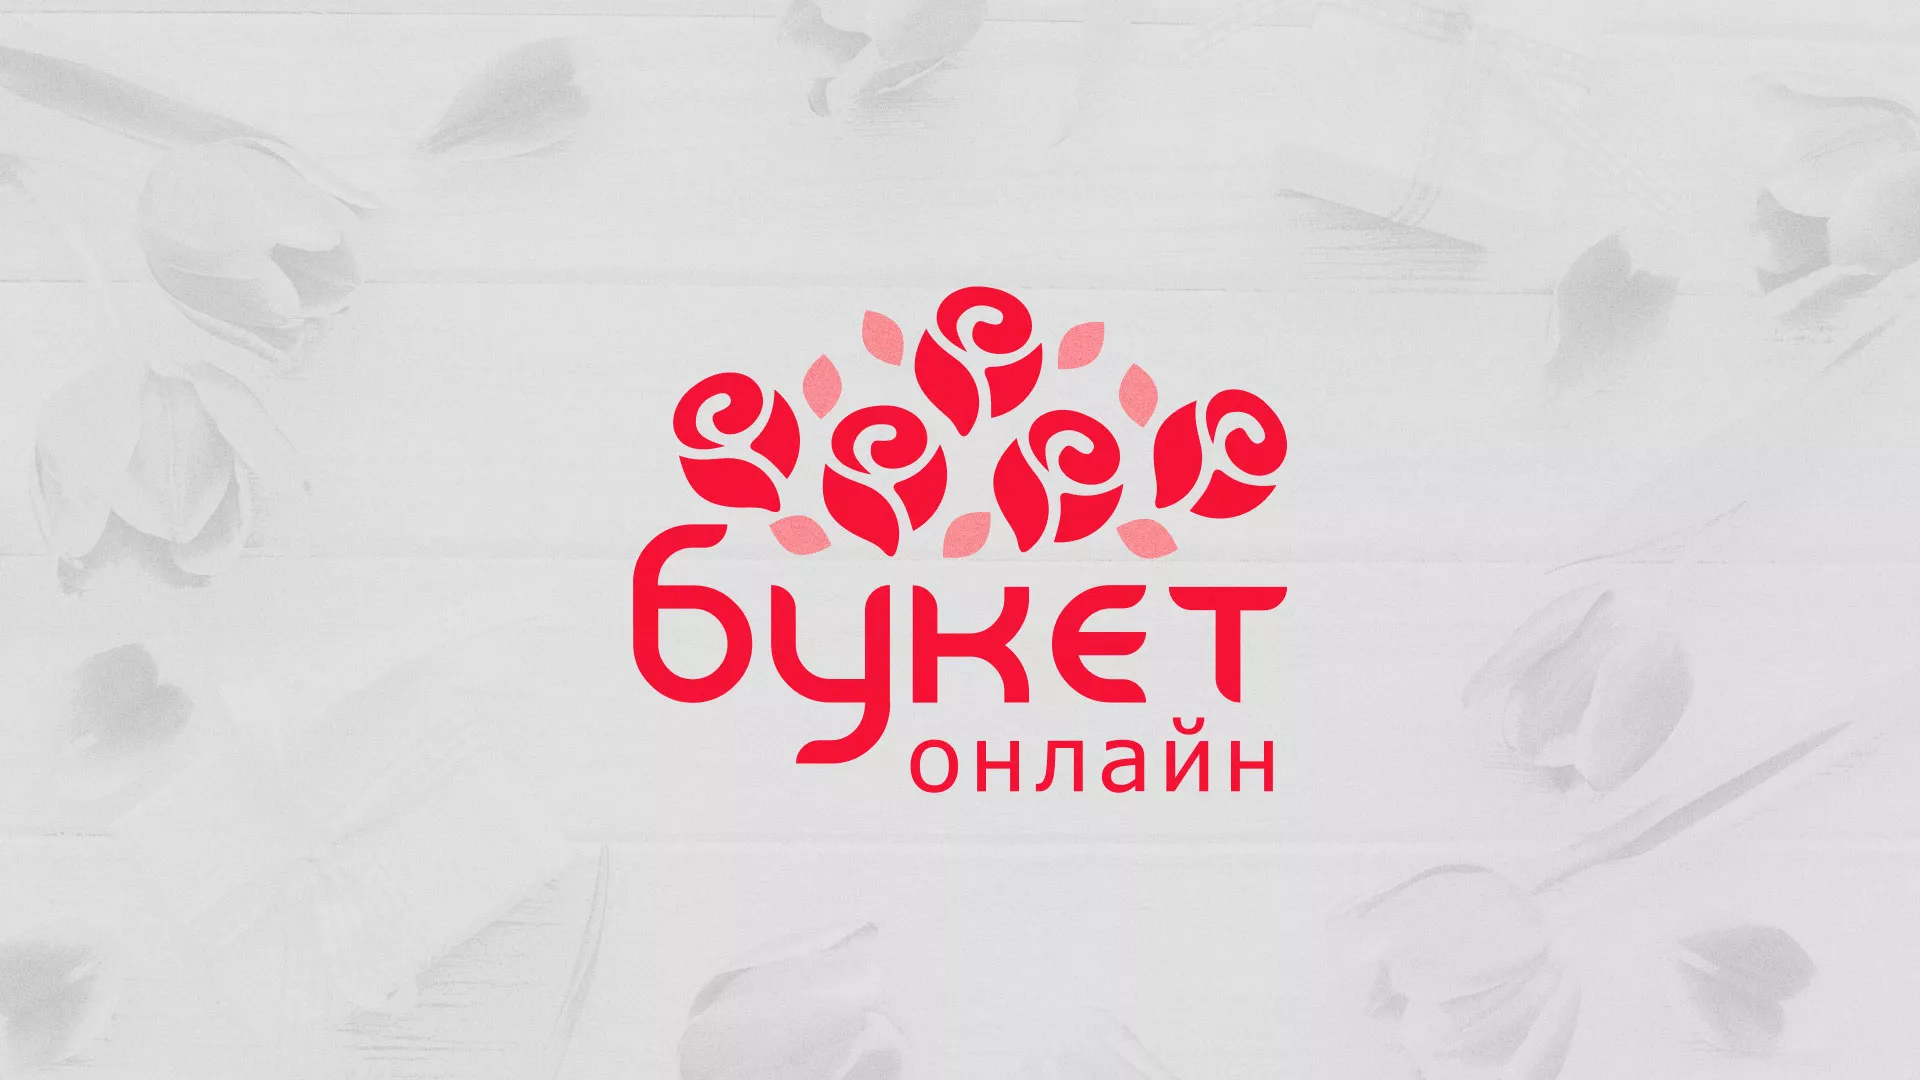 Создание интернет-магазина «Букет-онлайн» по цветам в Брянске